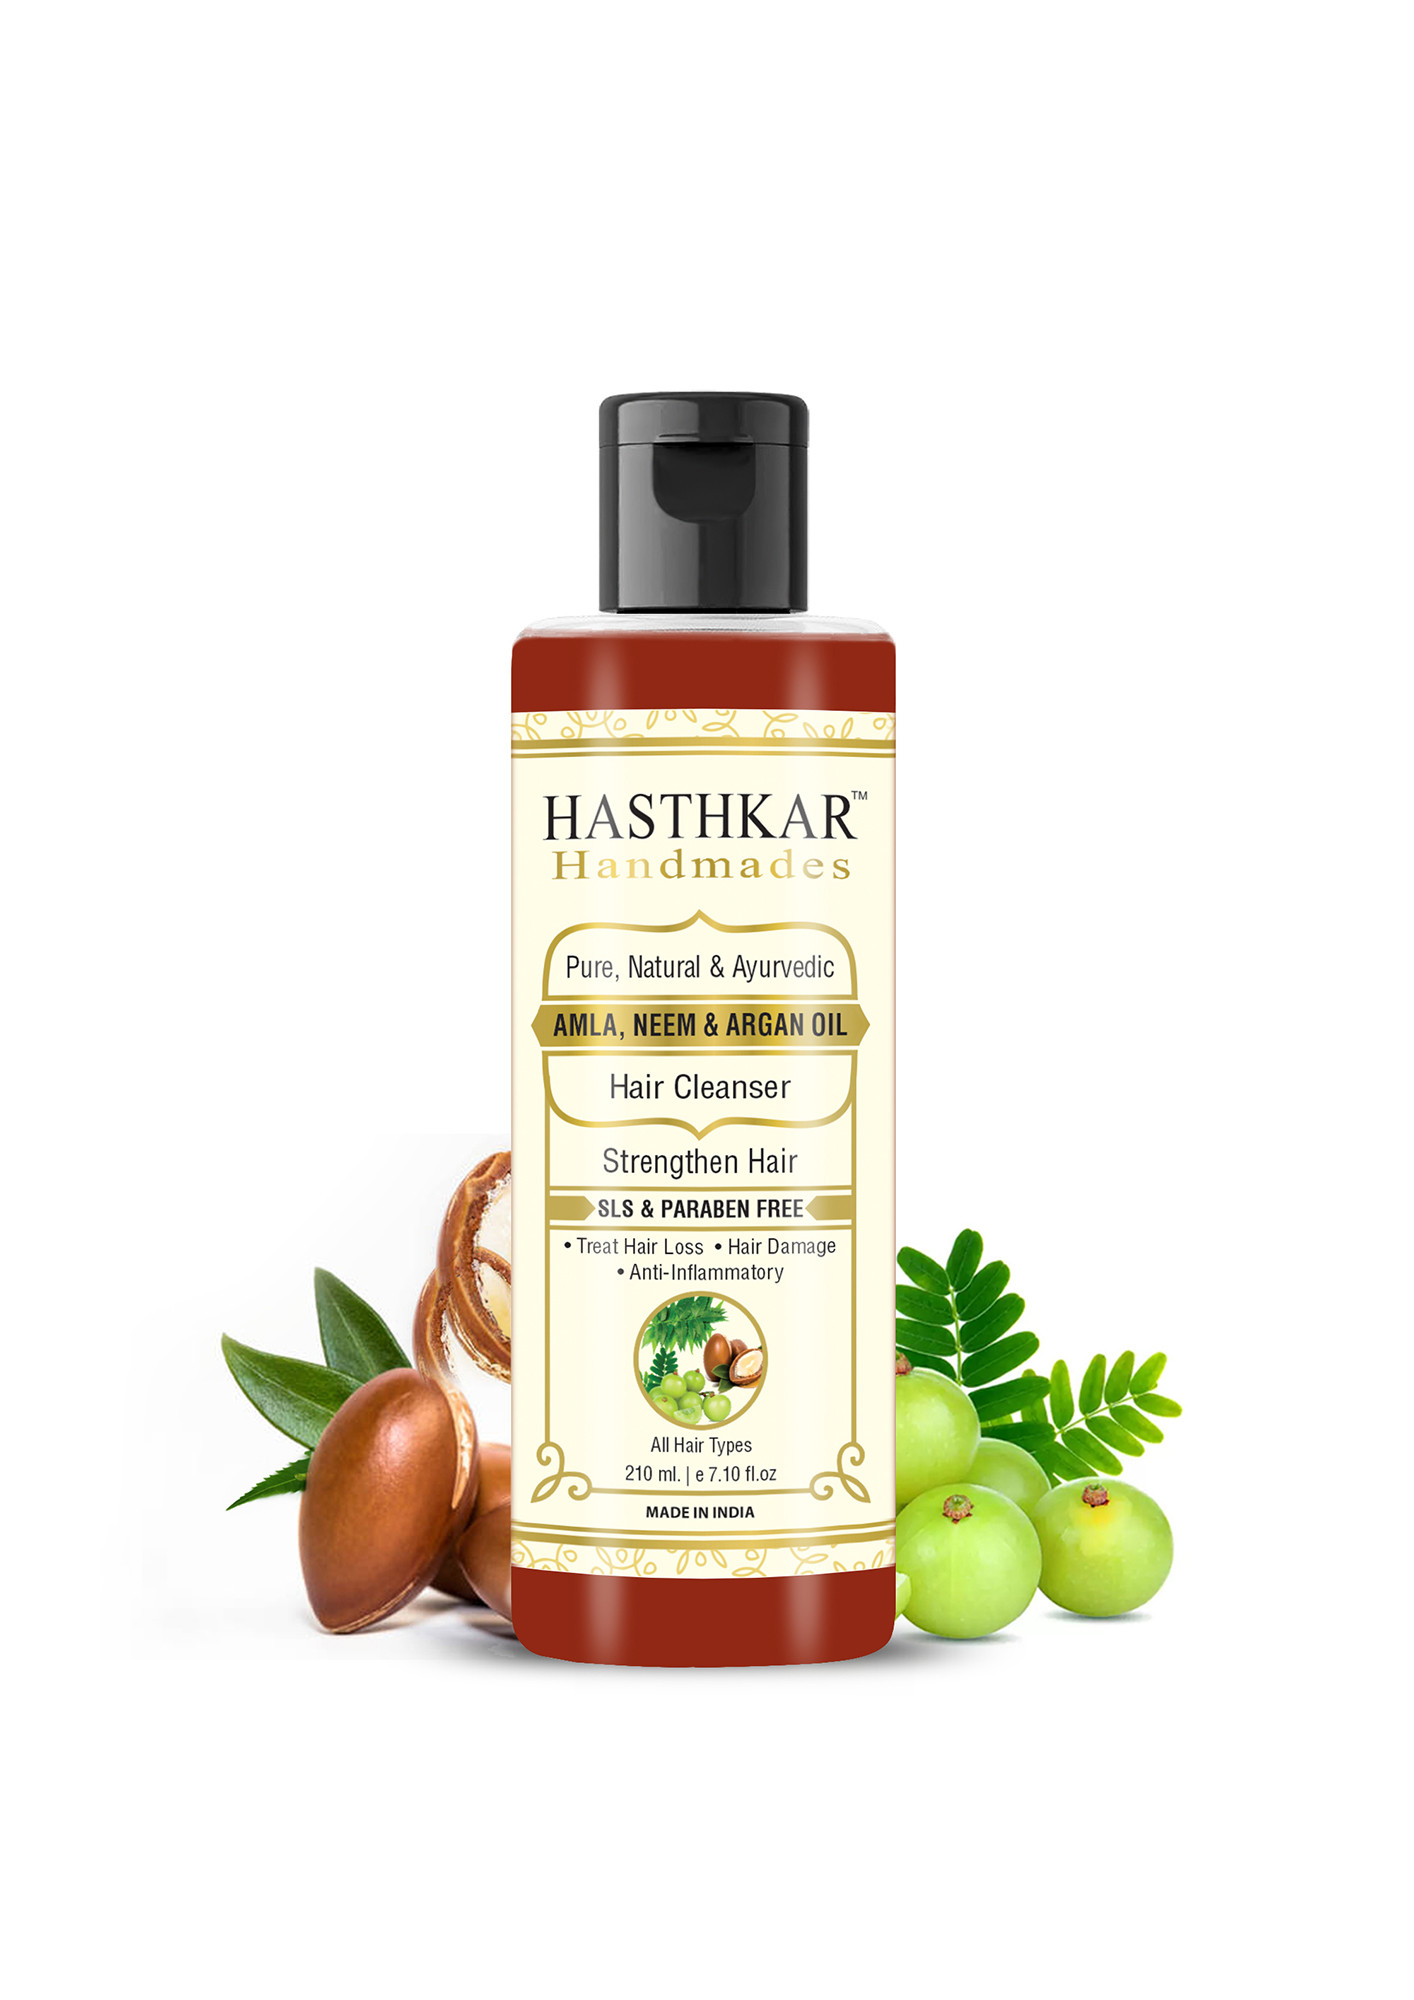 Hasthkar Handmades SLS Paraben Free Amla Neem & Argan Oil Hair Shampoo for Men & Women 210ml